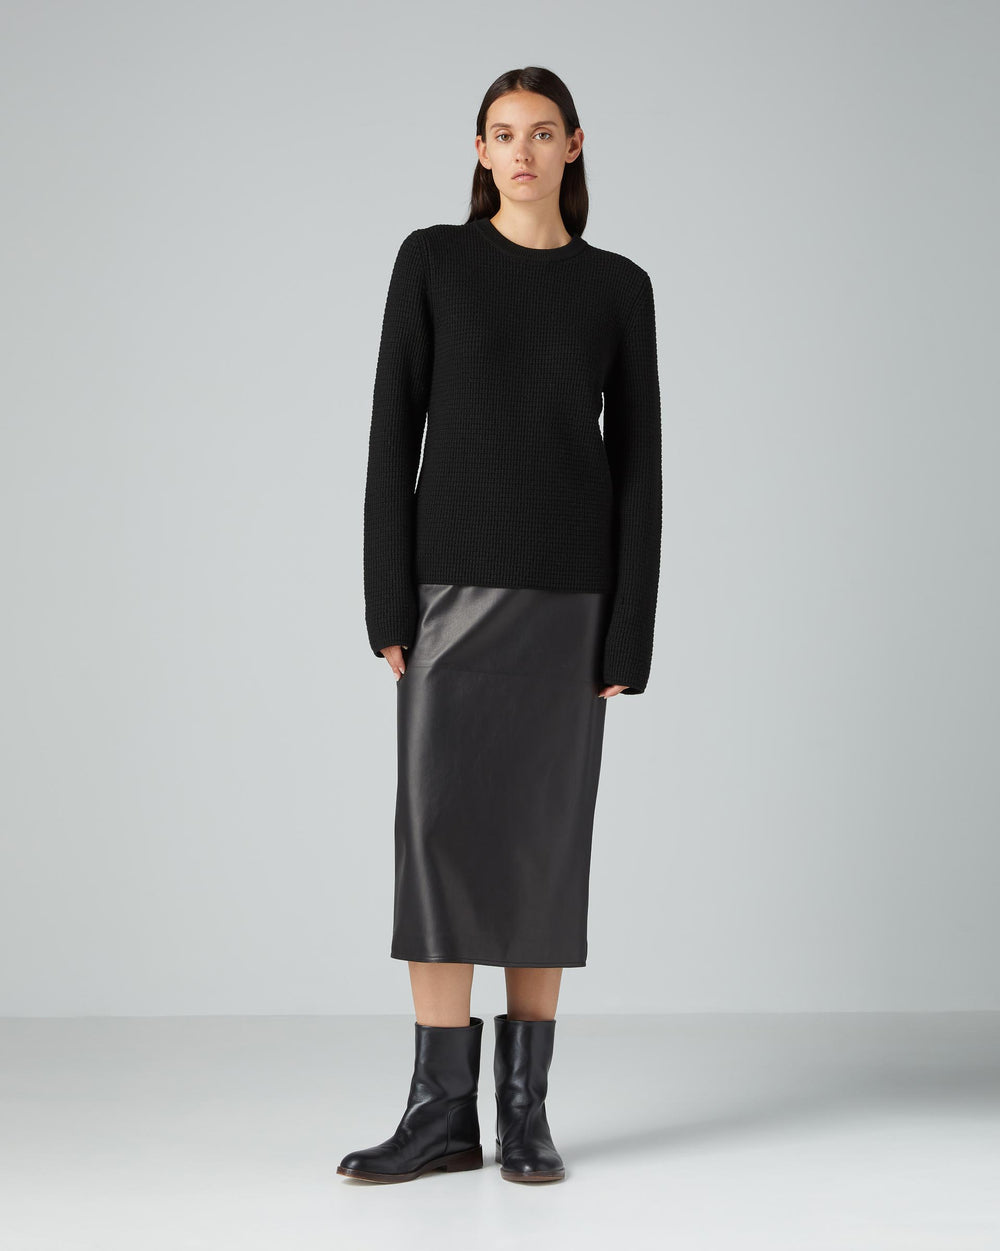 Chloe Sweater in Merino Wool, Black